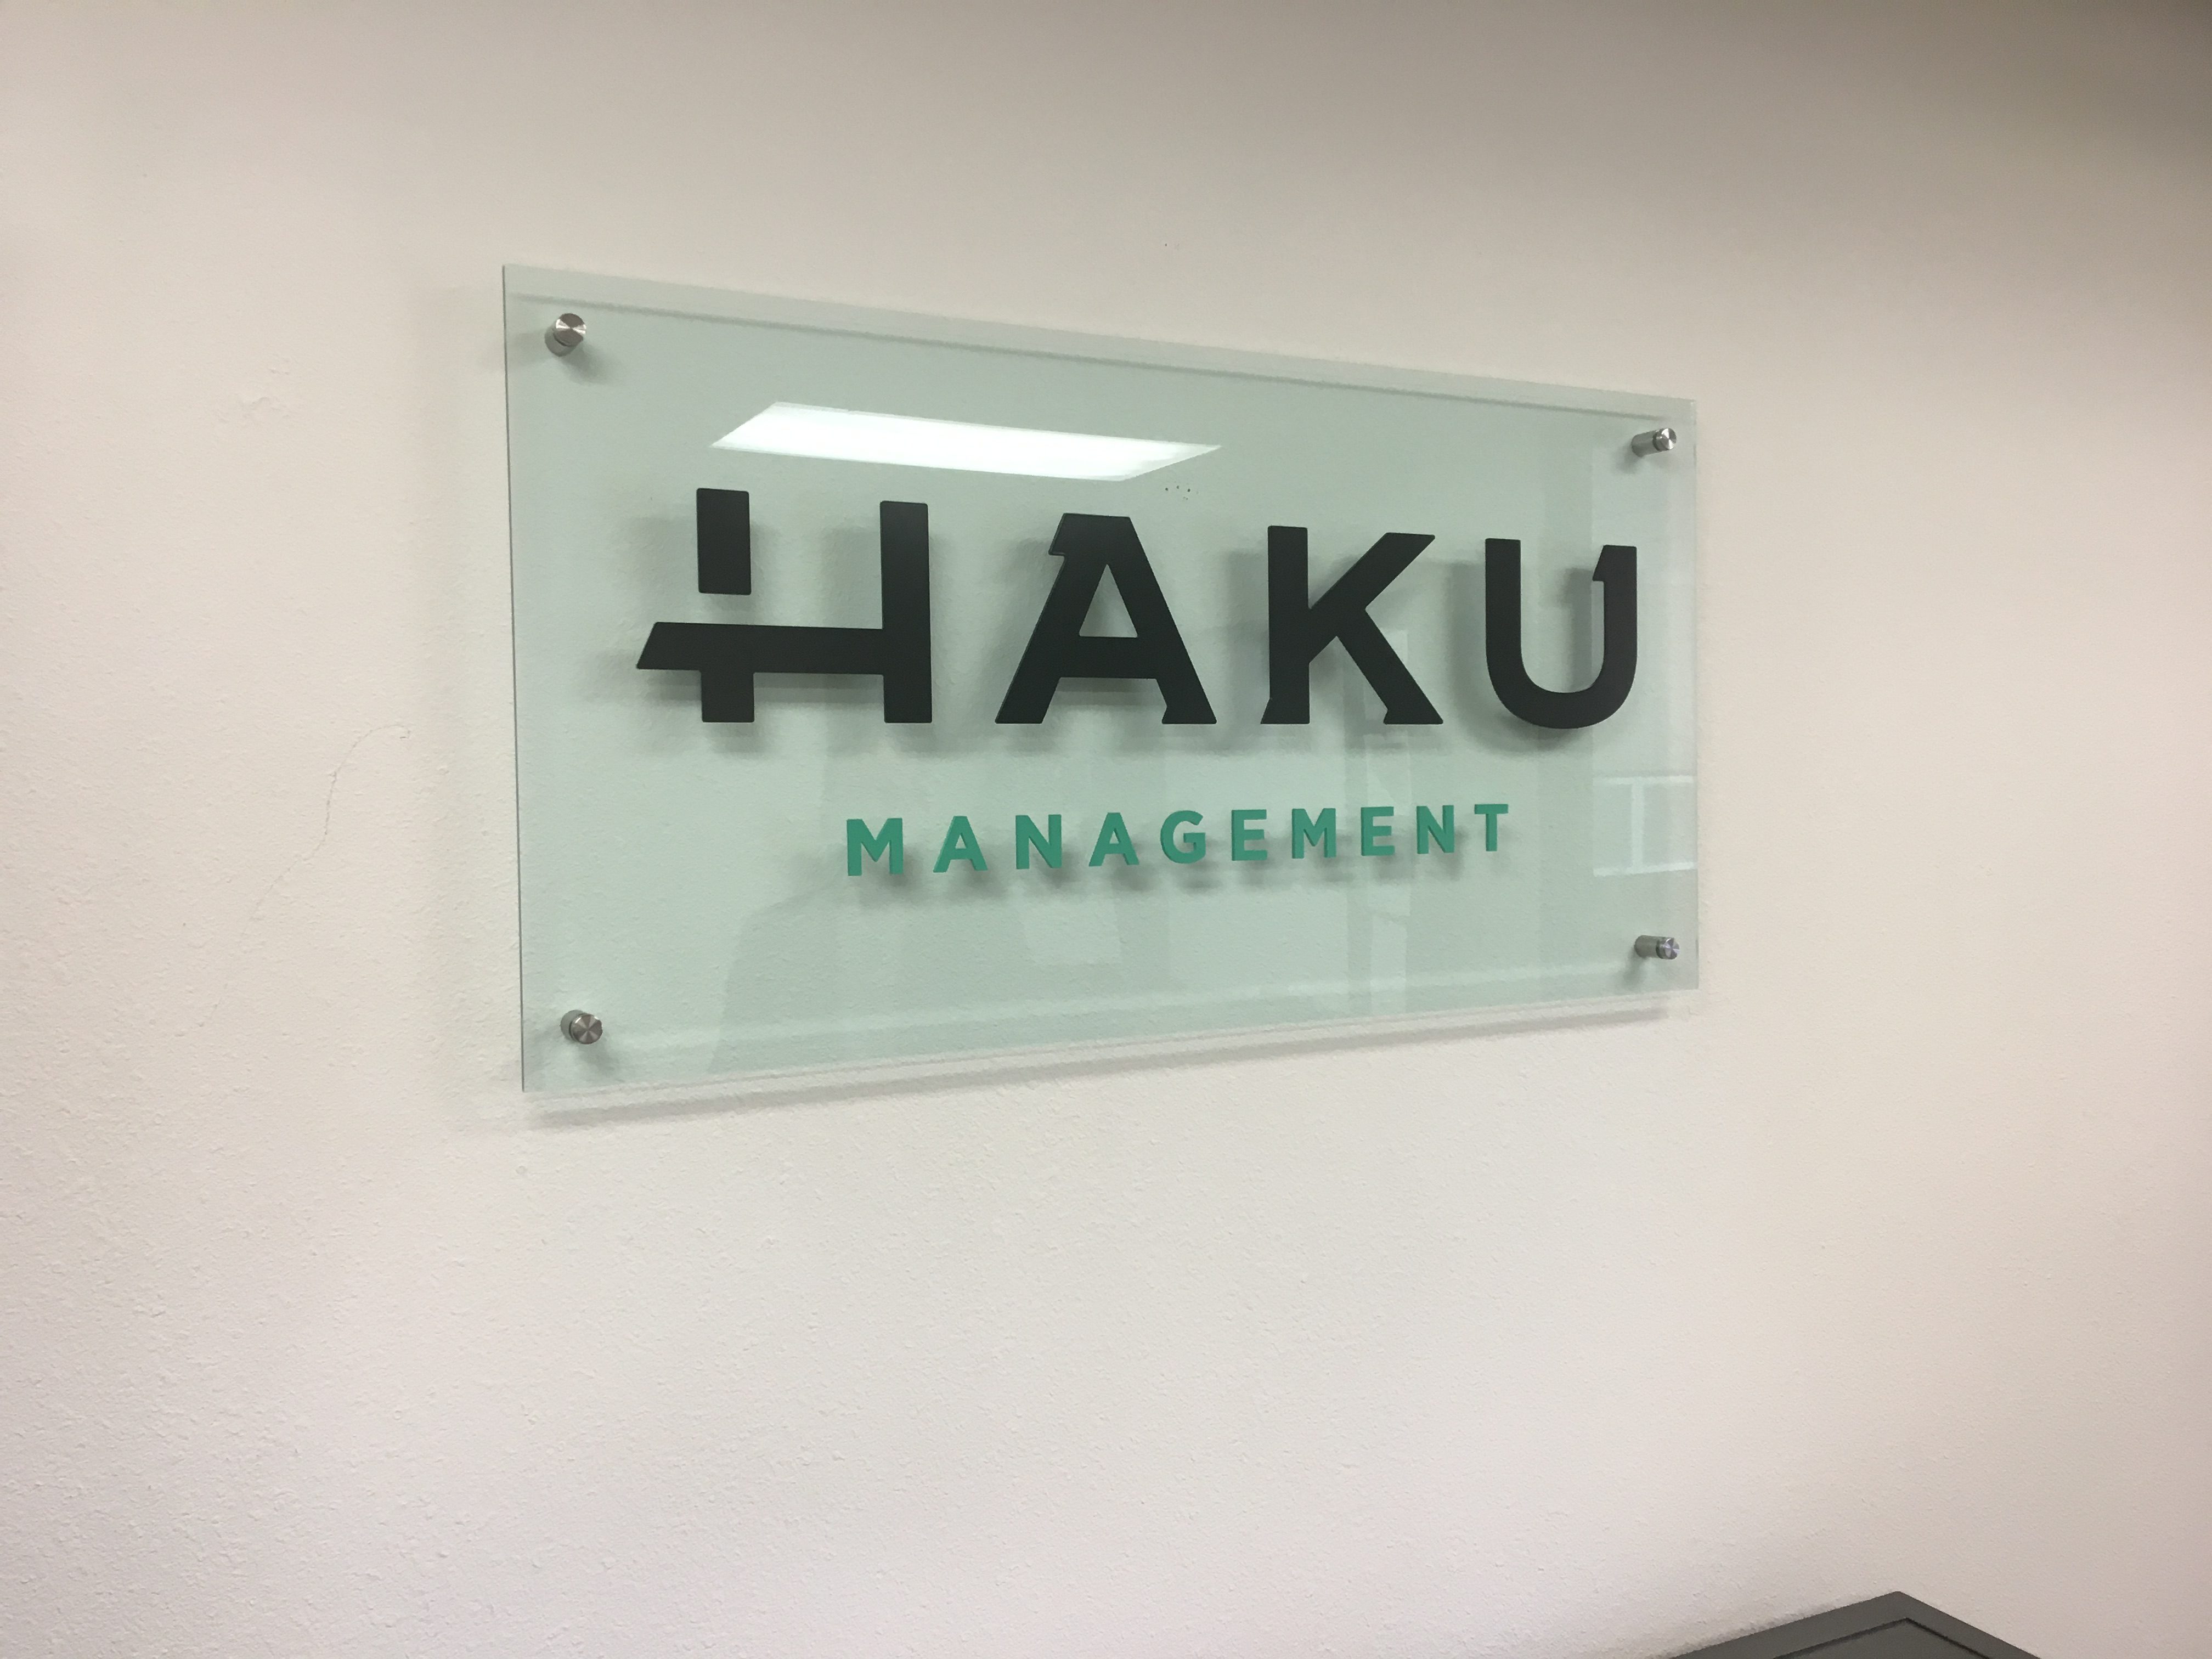 Haku Management – Monterey, CA